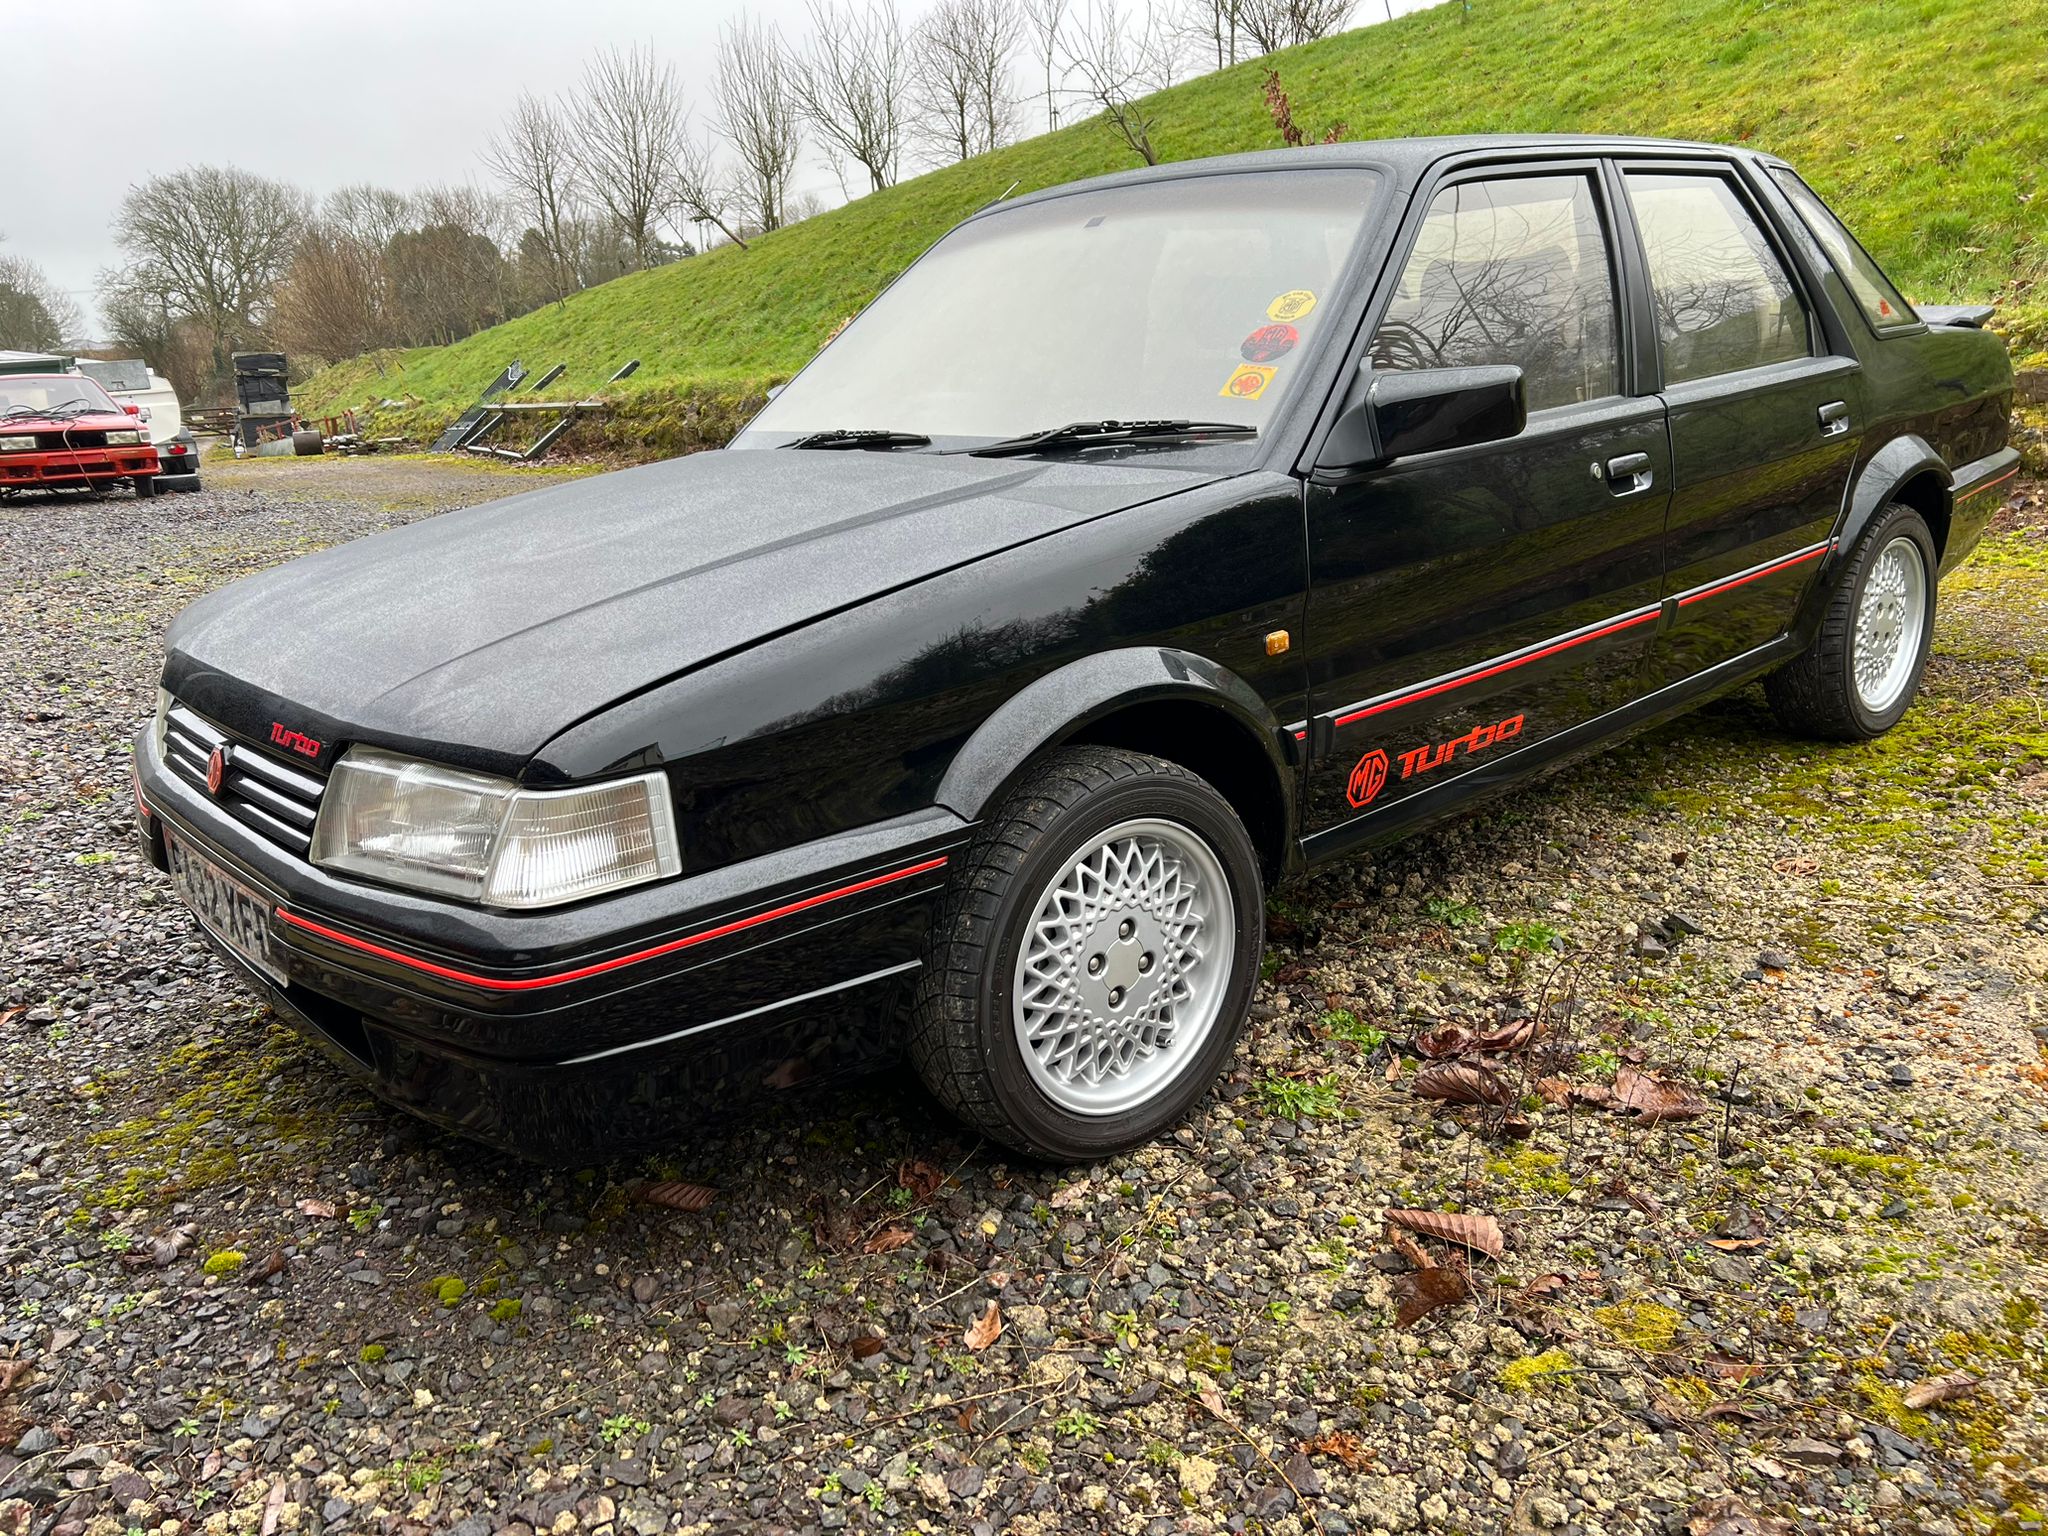 MG Montego Turbo 1988 - Image 12 of 14